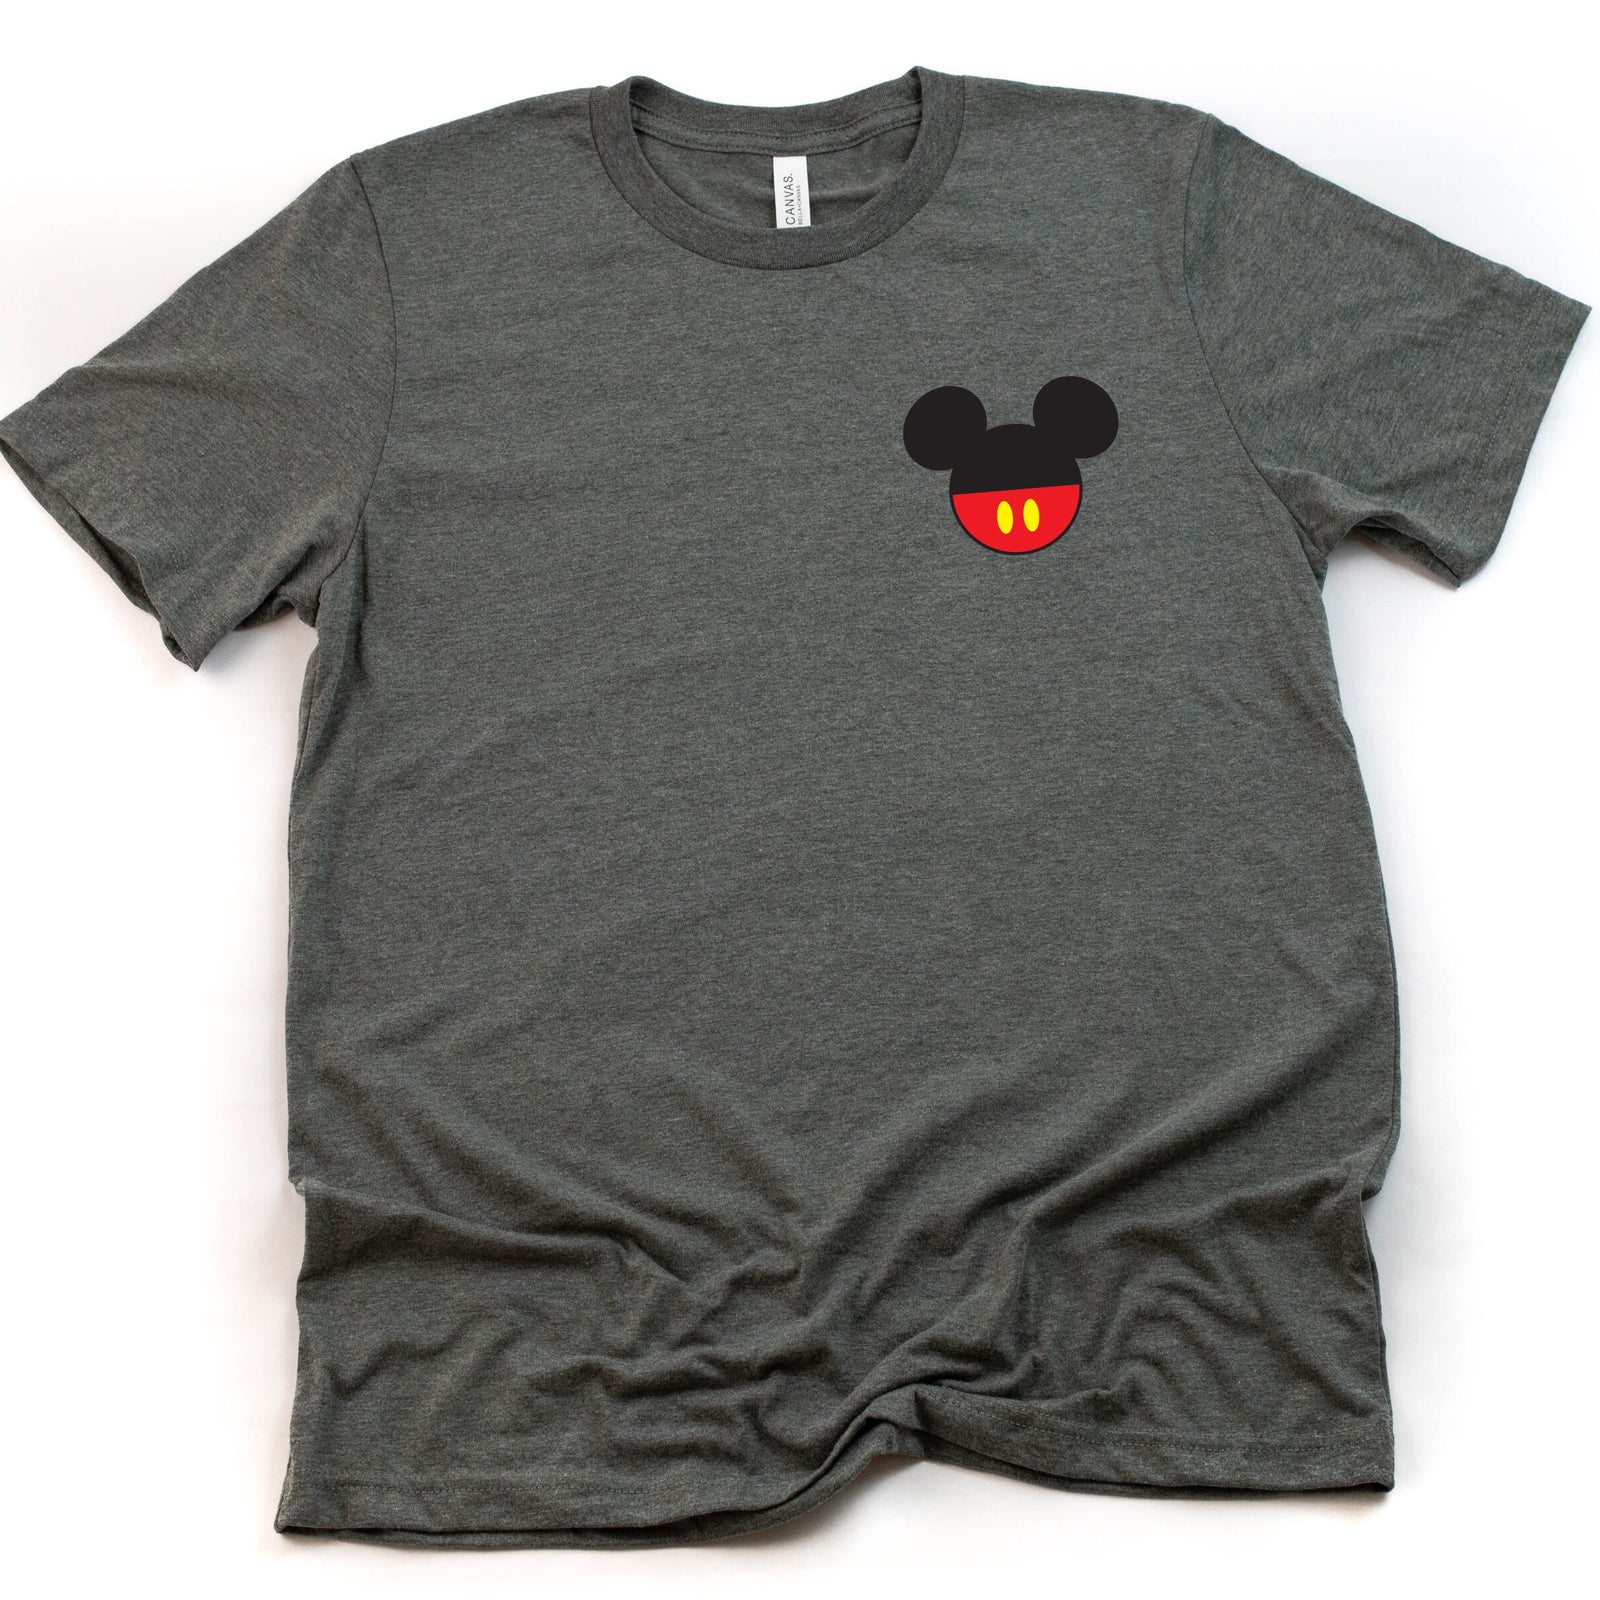 Pocket Size Mickey Mouse Adult Unisex T shirt - Disney Trip Matching Shirts - Left Chest Logo Size